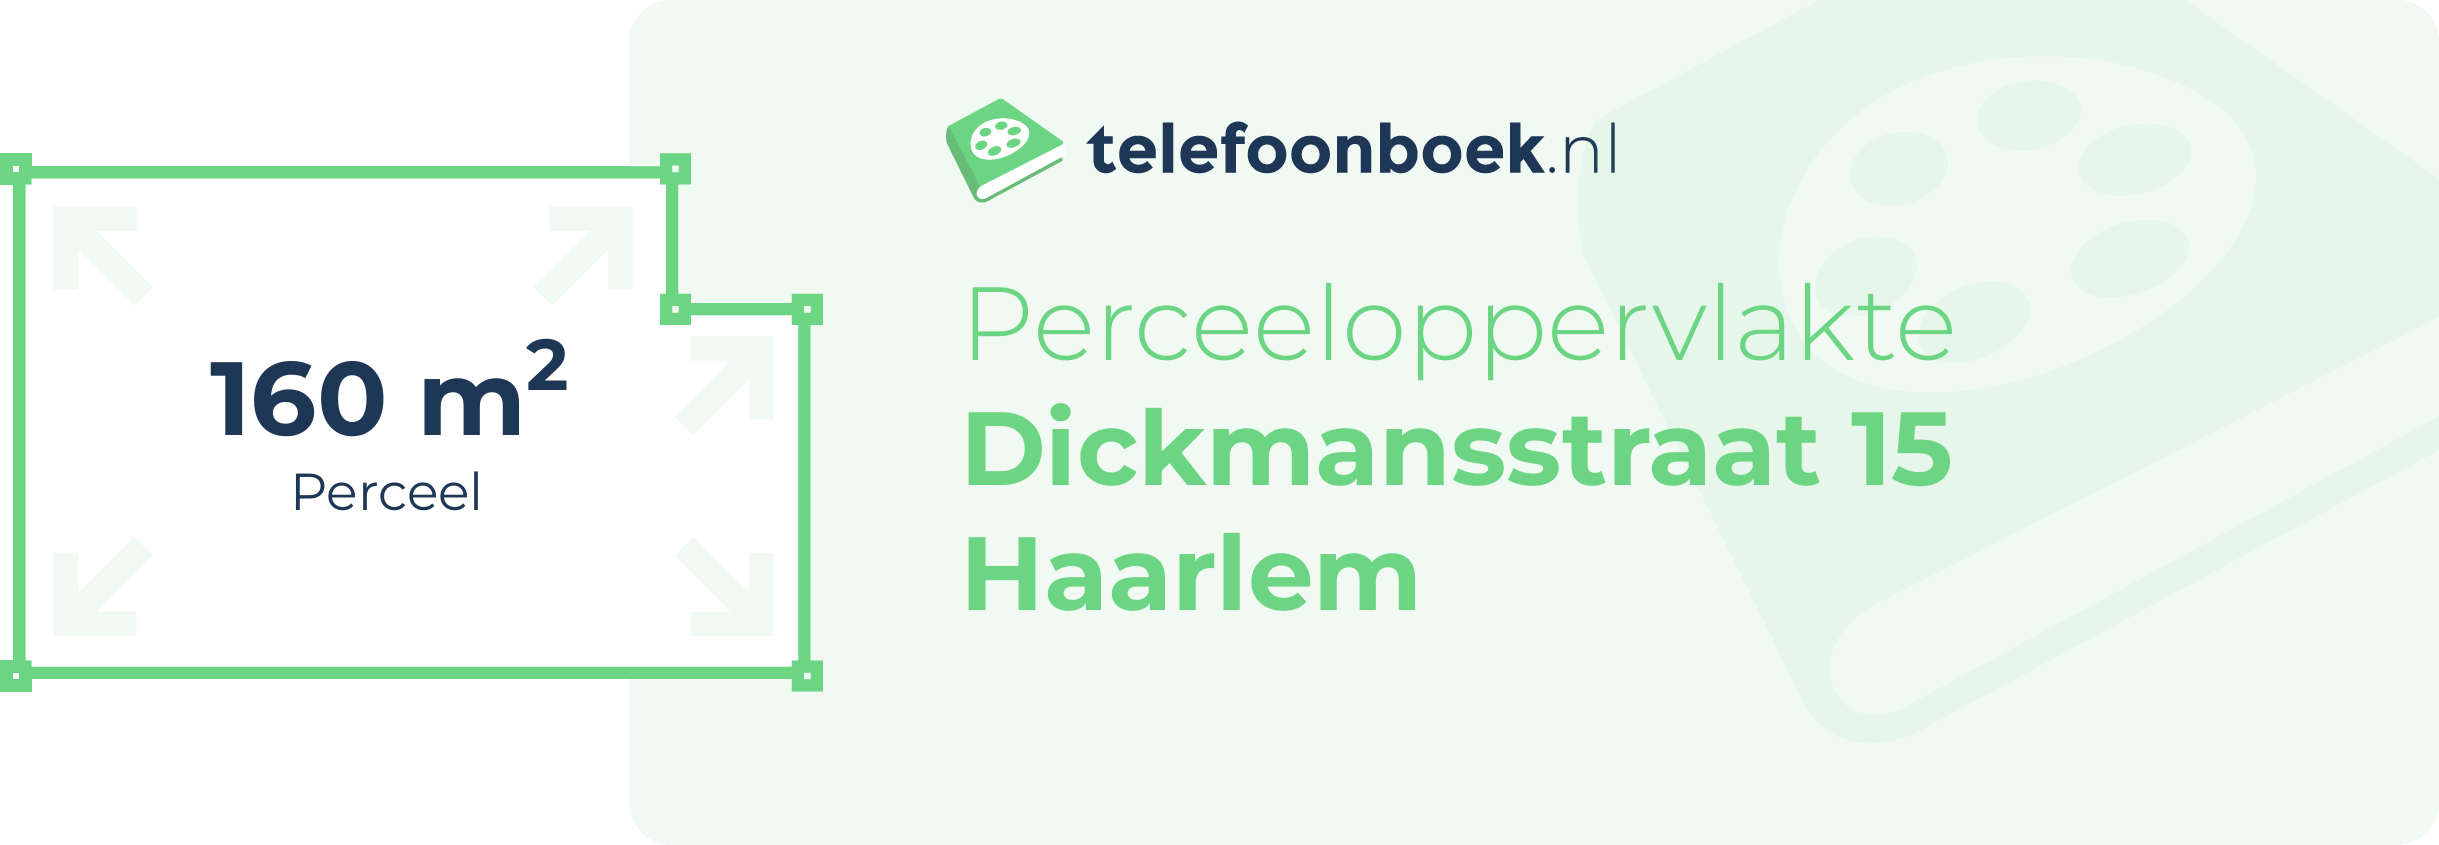 Perceeloppervlakte Dickmansstraat 15 Haarlem